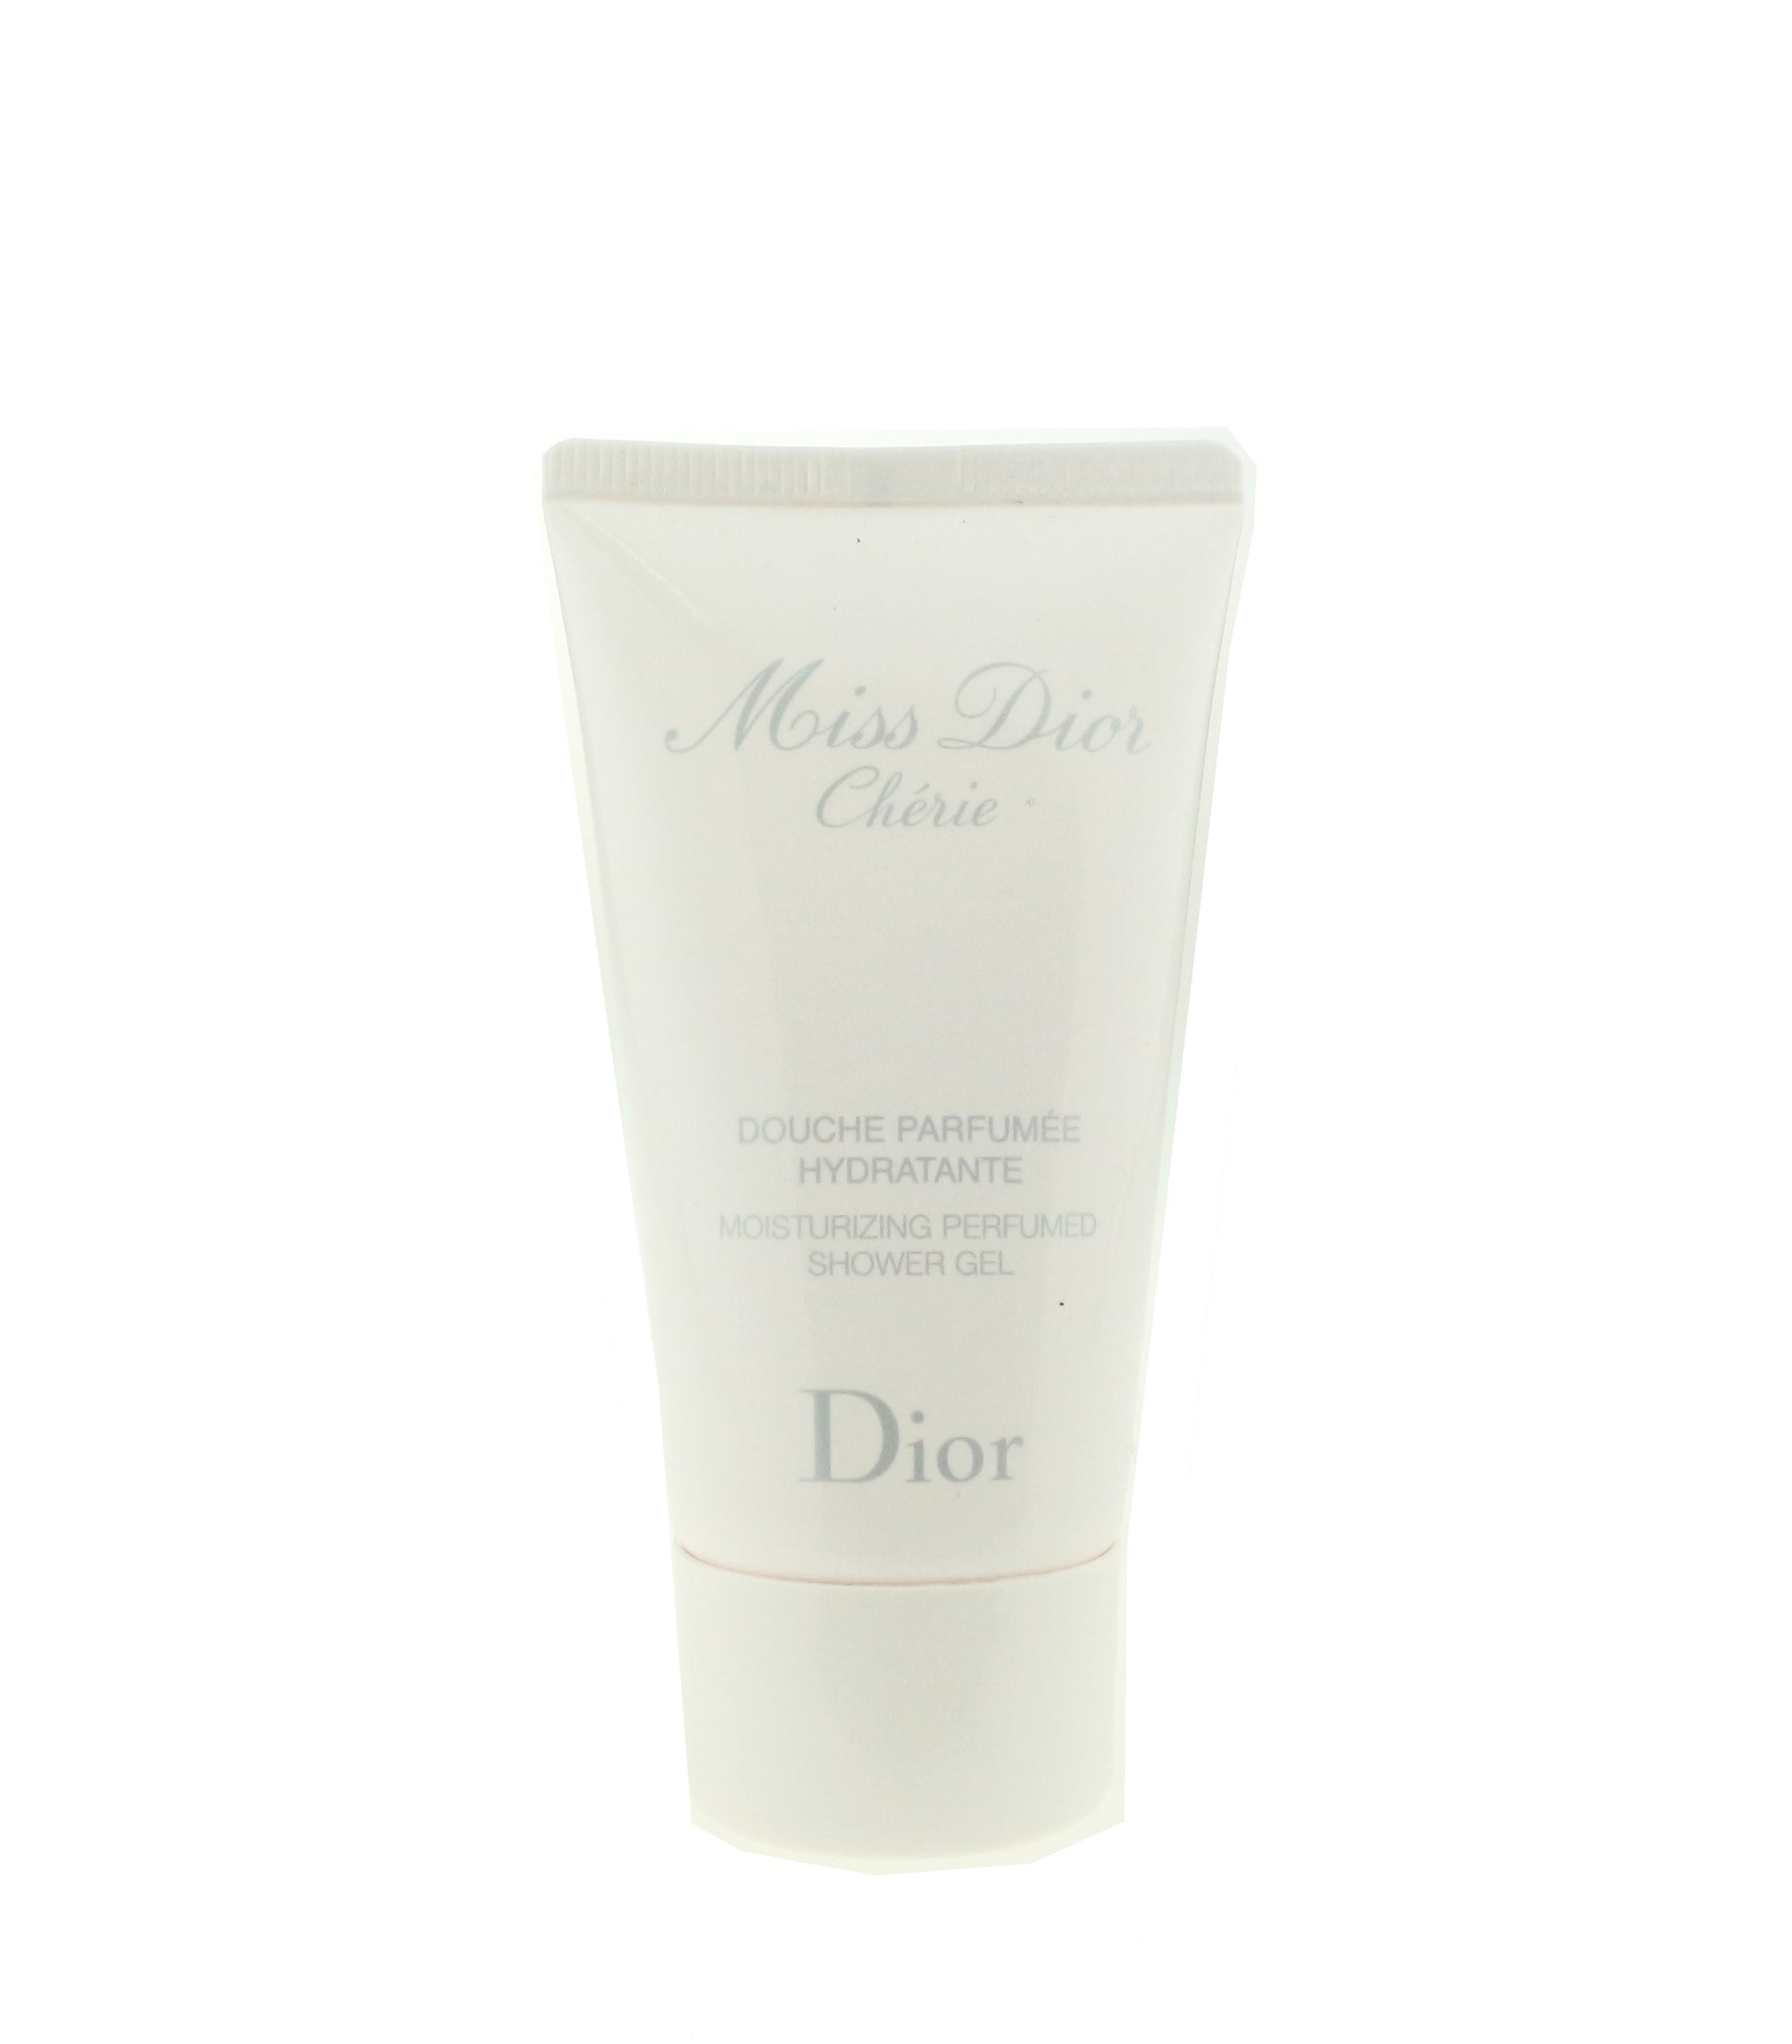 Miss Dior Cherie Moisturizing Perfumed Shower Gel 50 ml